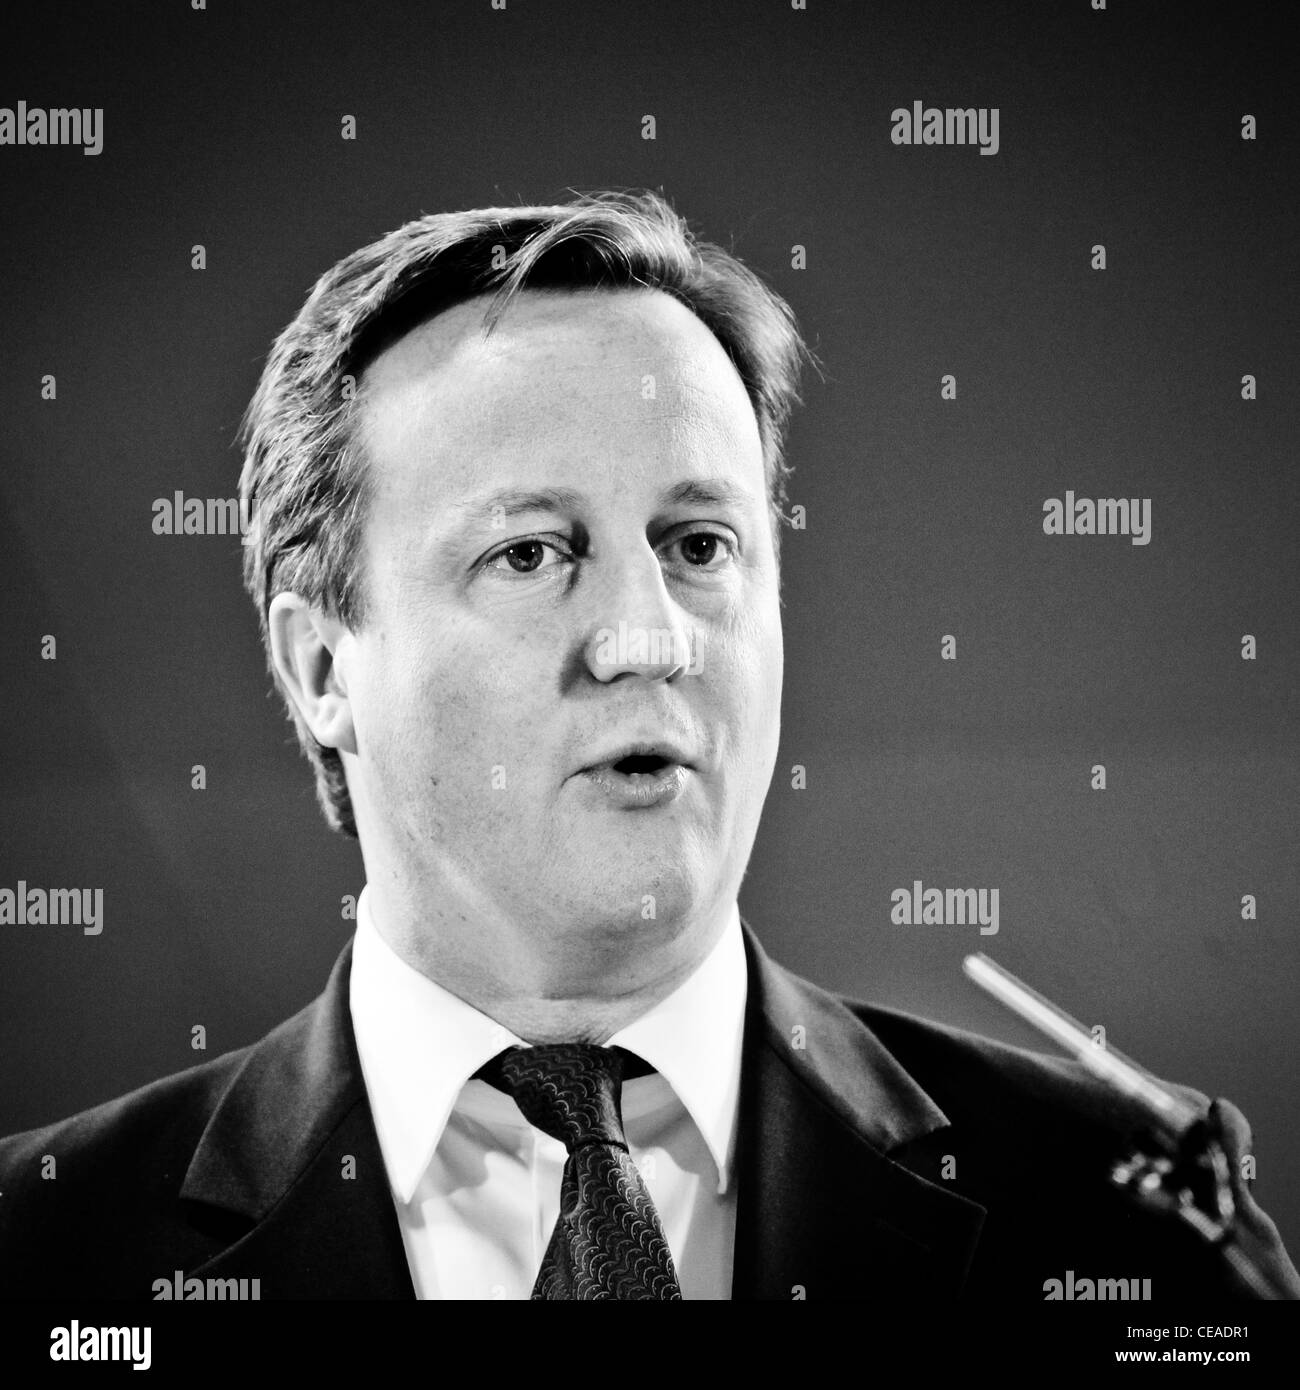 David Cameron Foto de stock